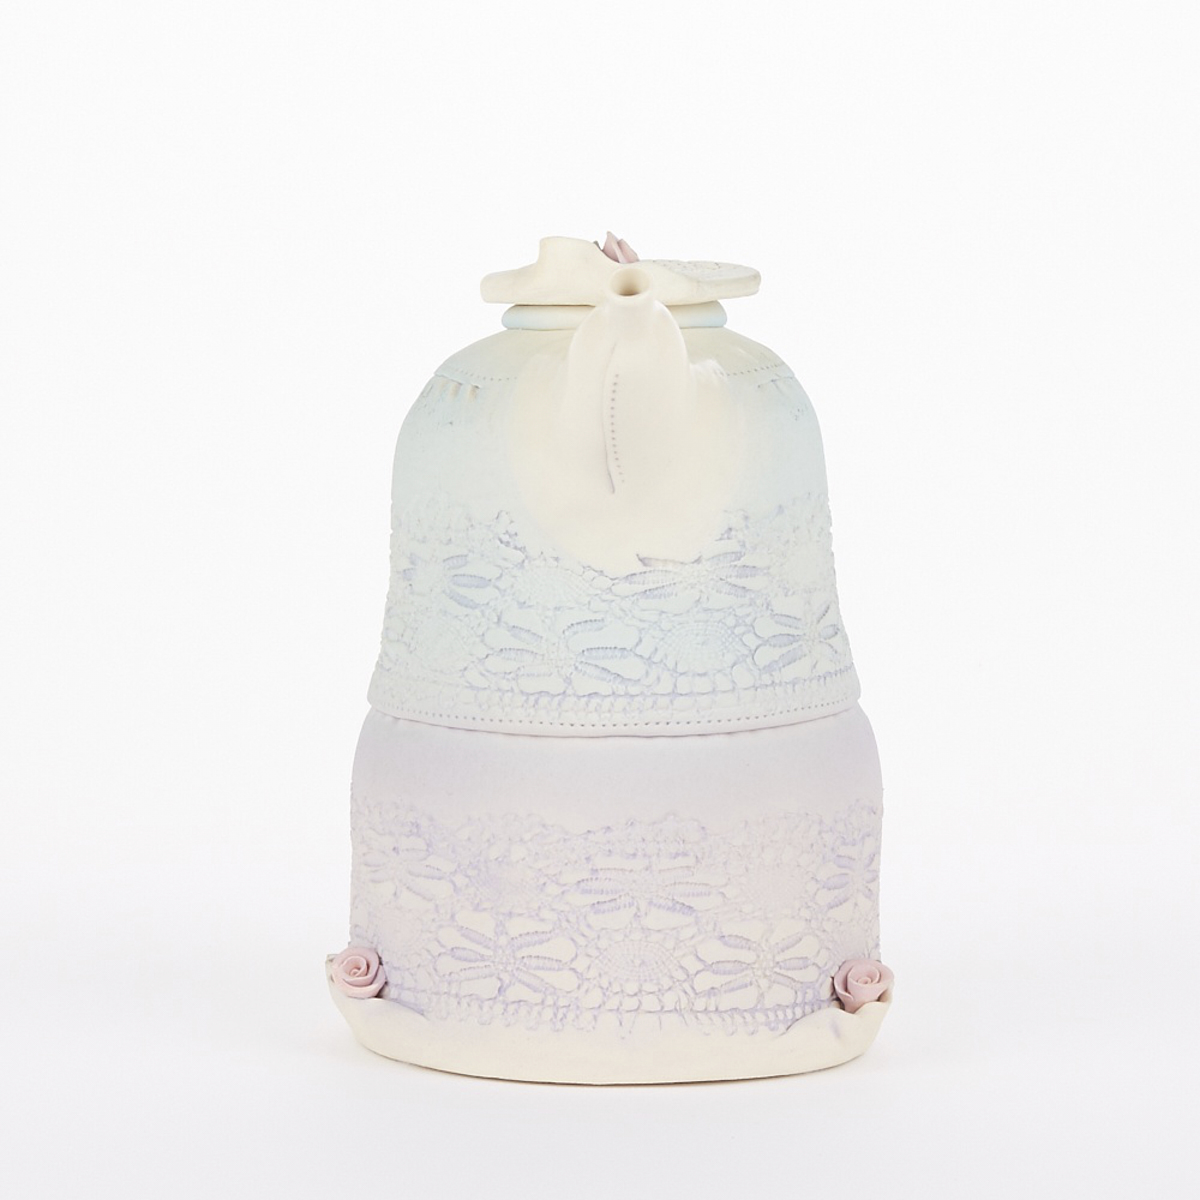 Laura Peery Porcelain Teapot - Image 4 of 6